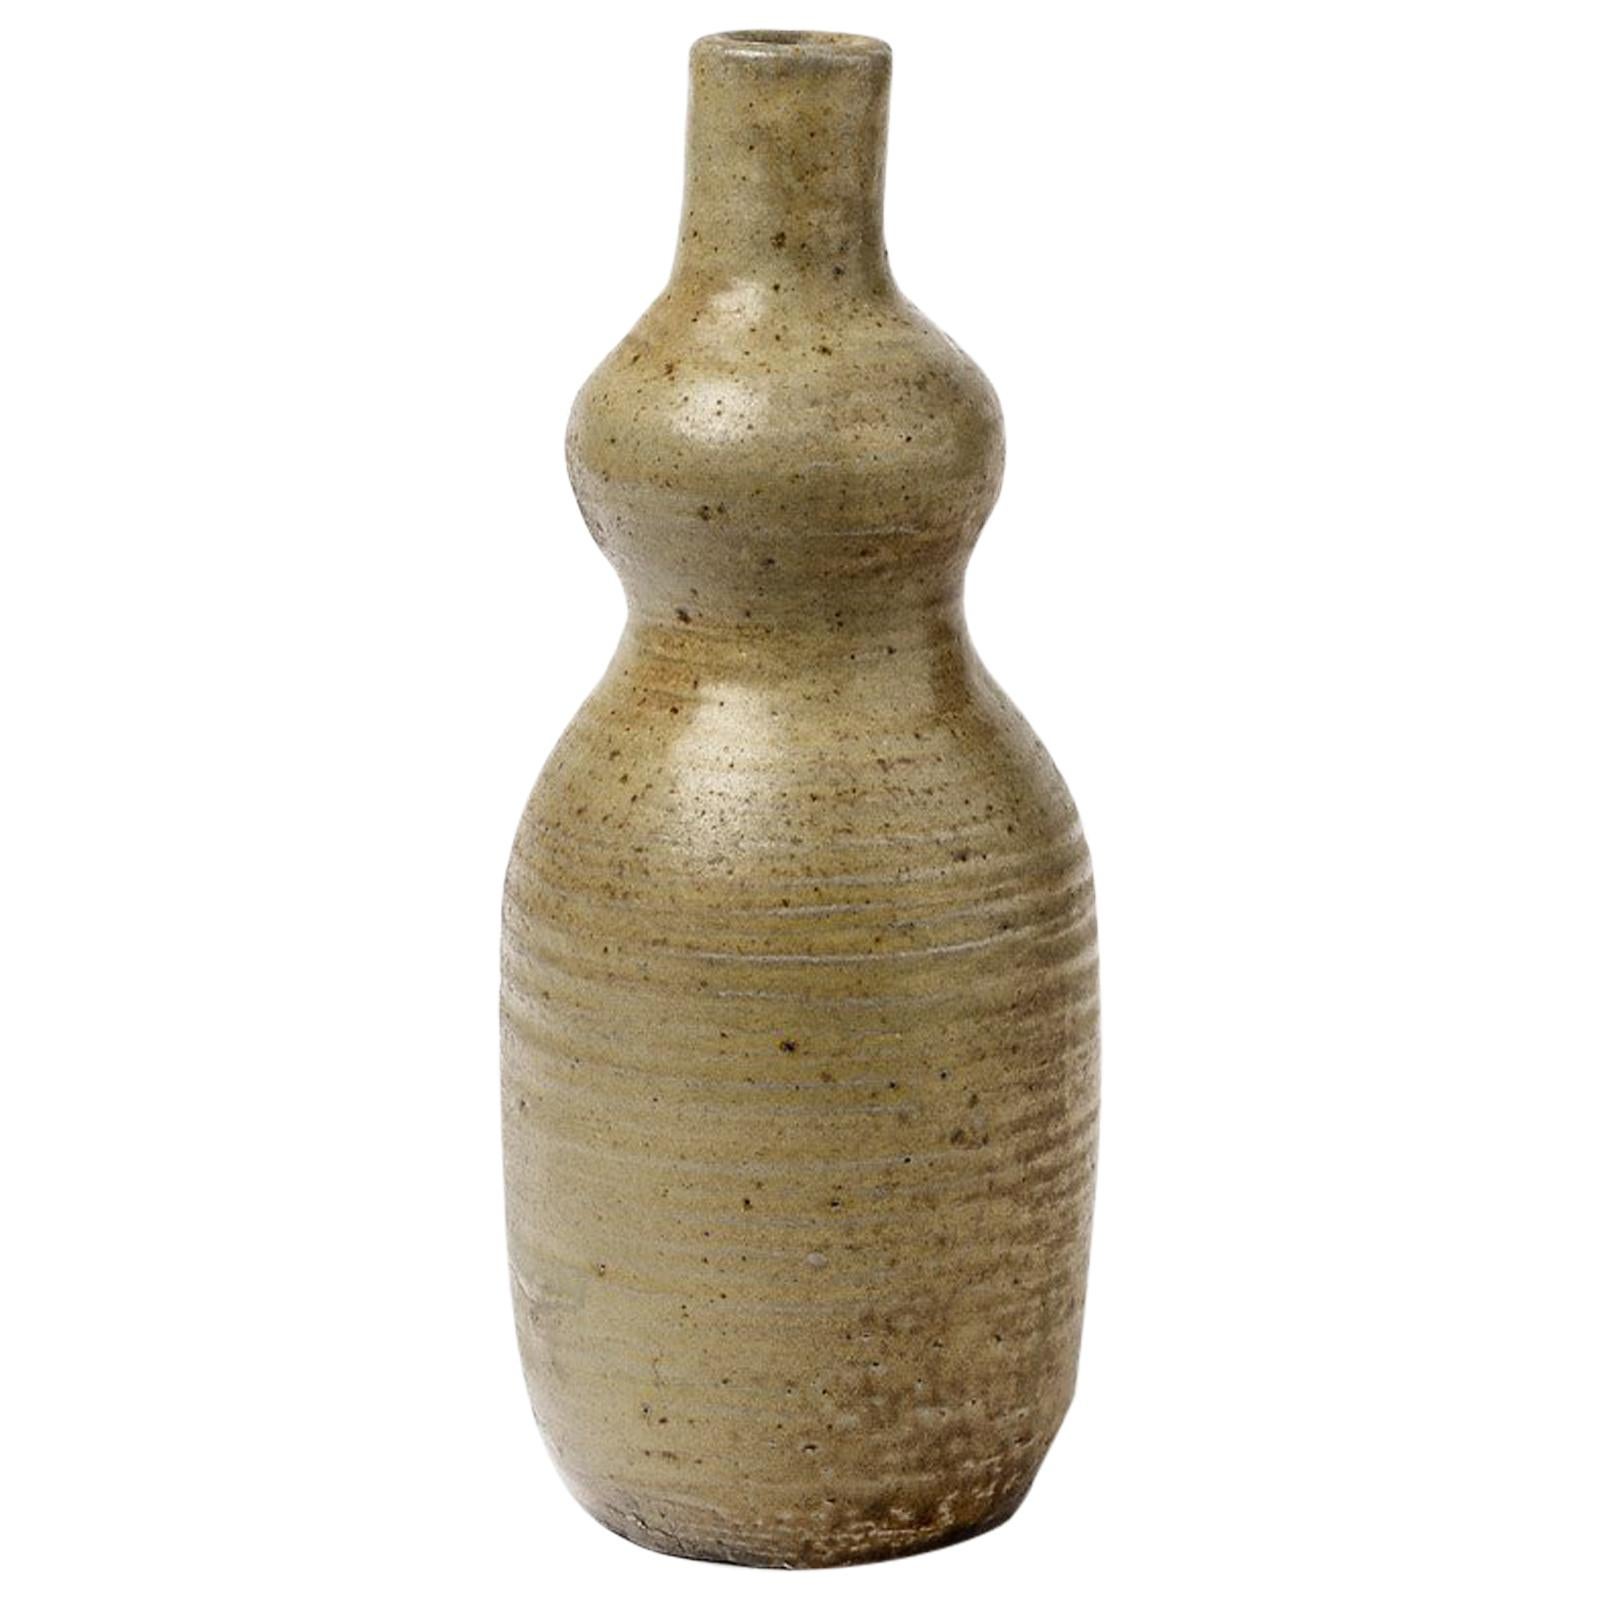 Midcentury Stoneware Ceramic Bottle Vase La Borne circa 1970 Grey Pottery Glaze